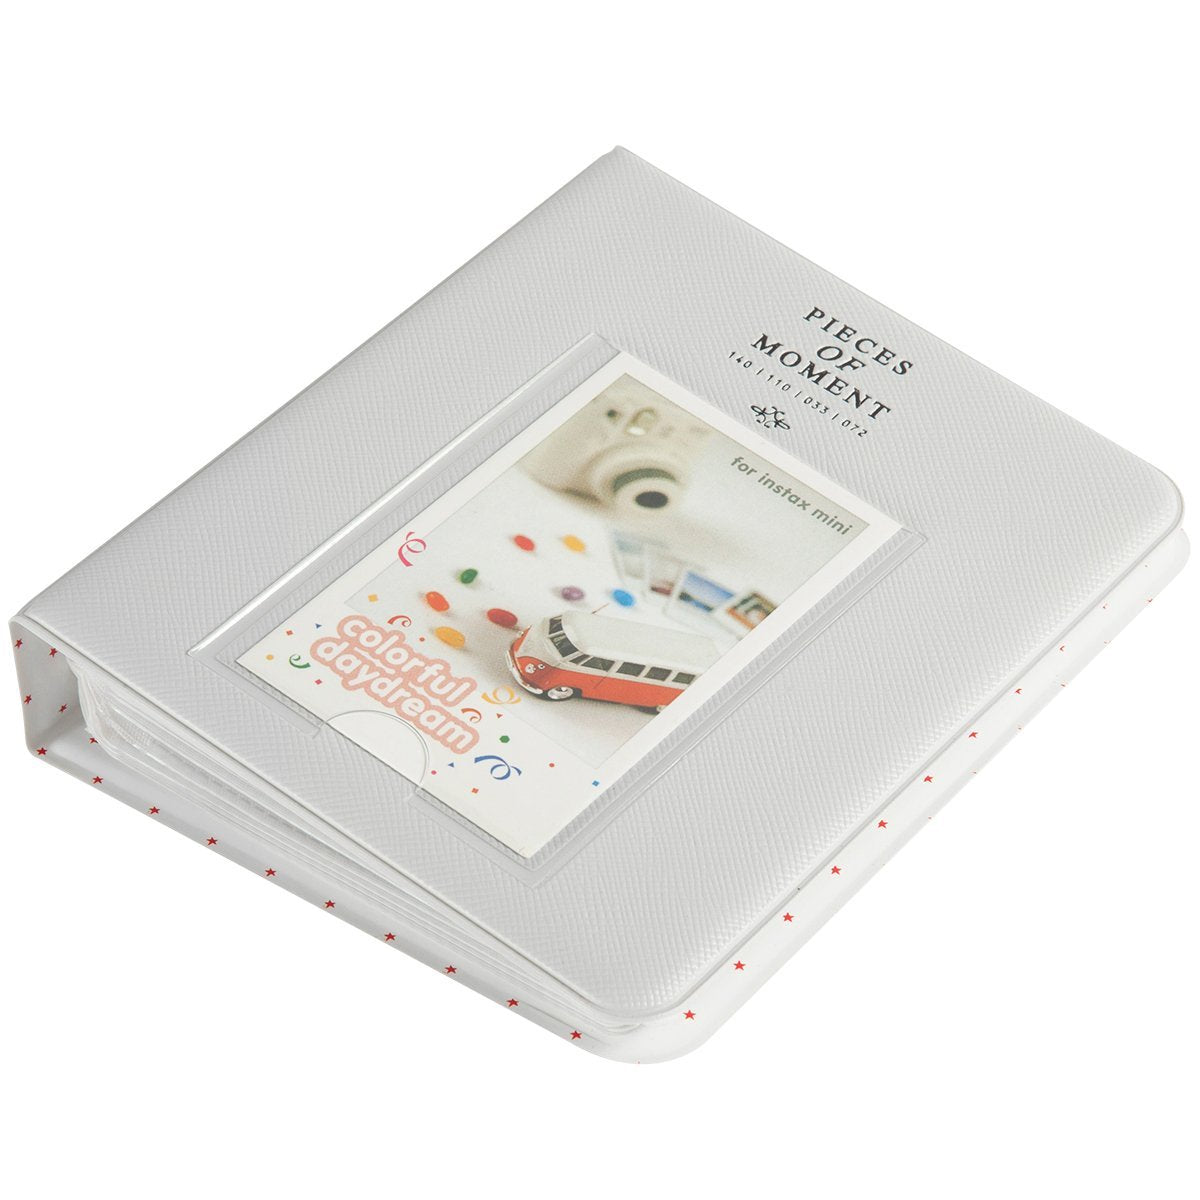 Fujifilm Instax Mini 10X1 candy pop Instant Film with Instax Time Photo Album 64 Sheets (SMOKEY WHITE)